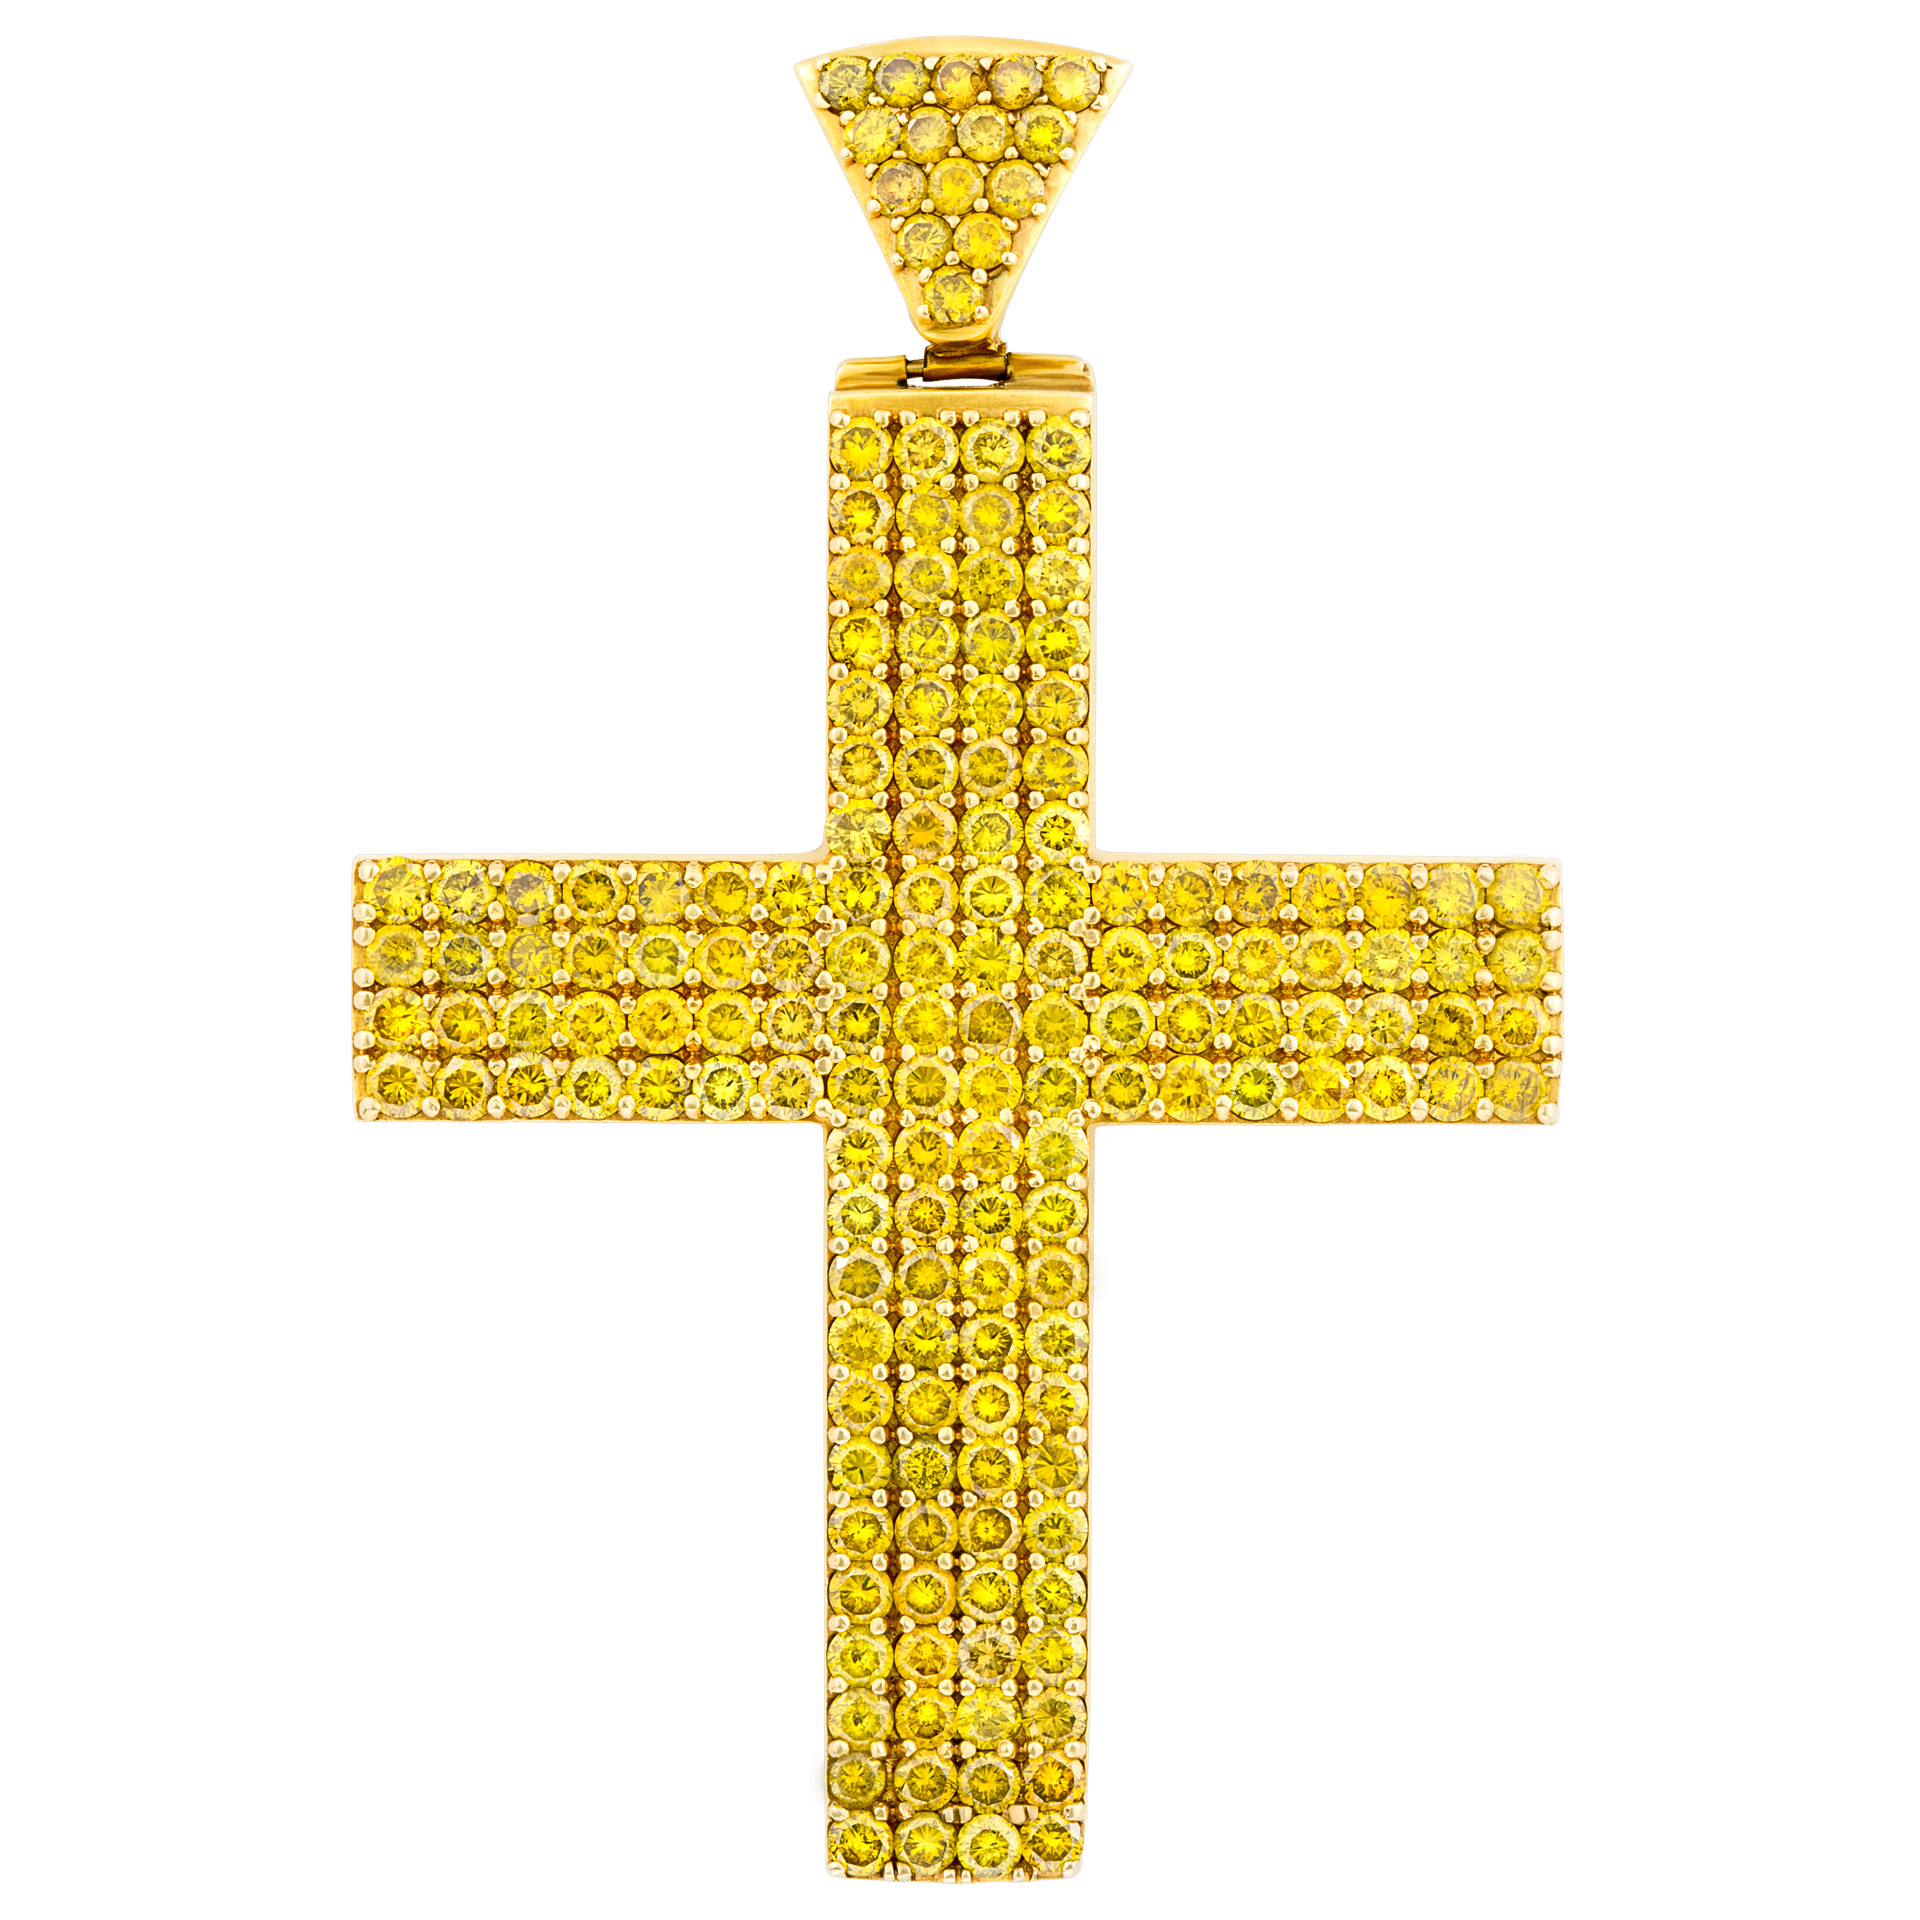 Golden yellow diamond cross in 14k yellow gold. 16 carats in diamonds. SI1 clarity.